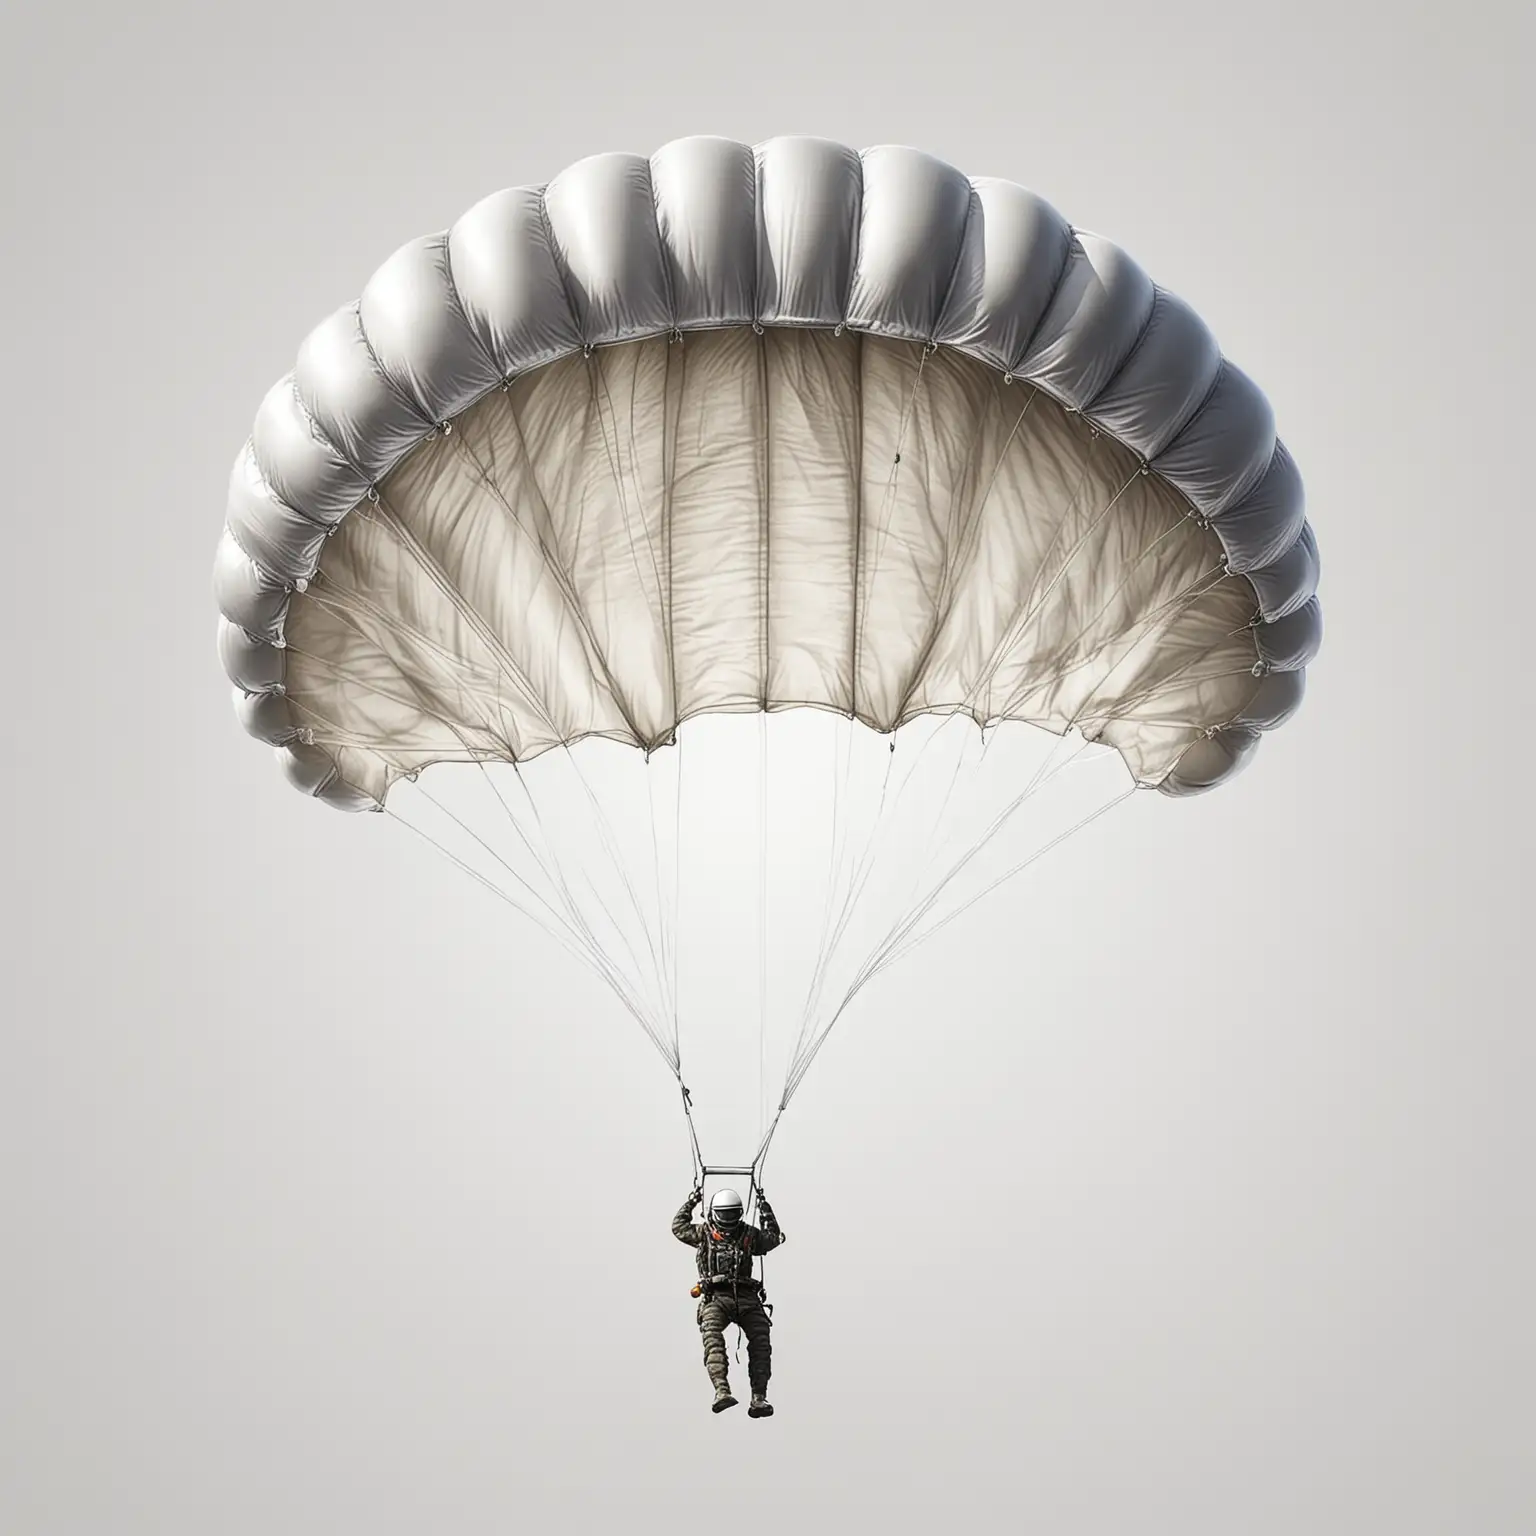 Realistic Parachute Illustration on White Background